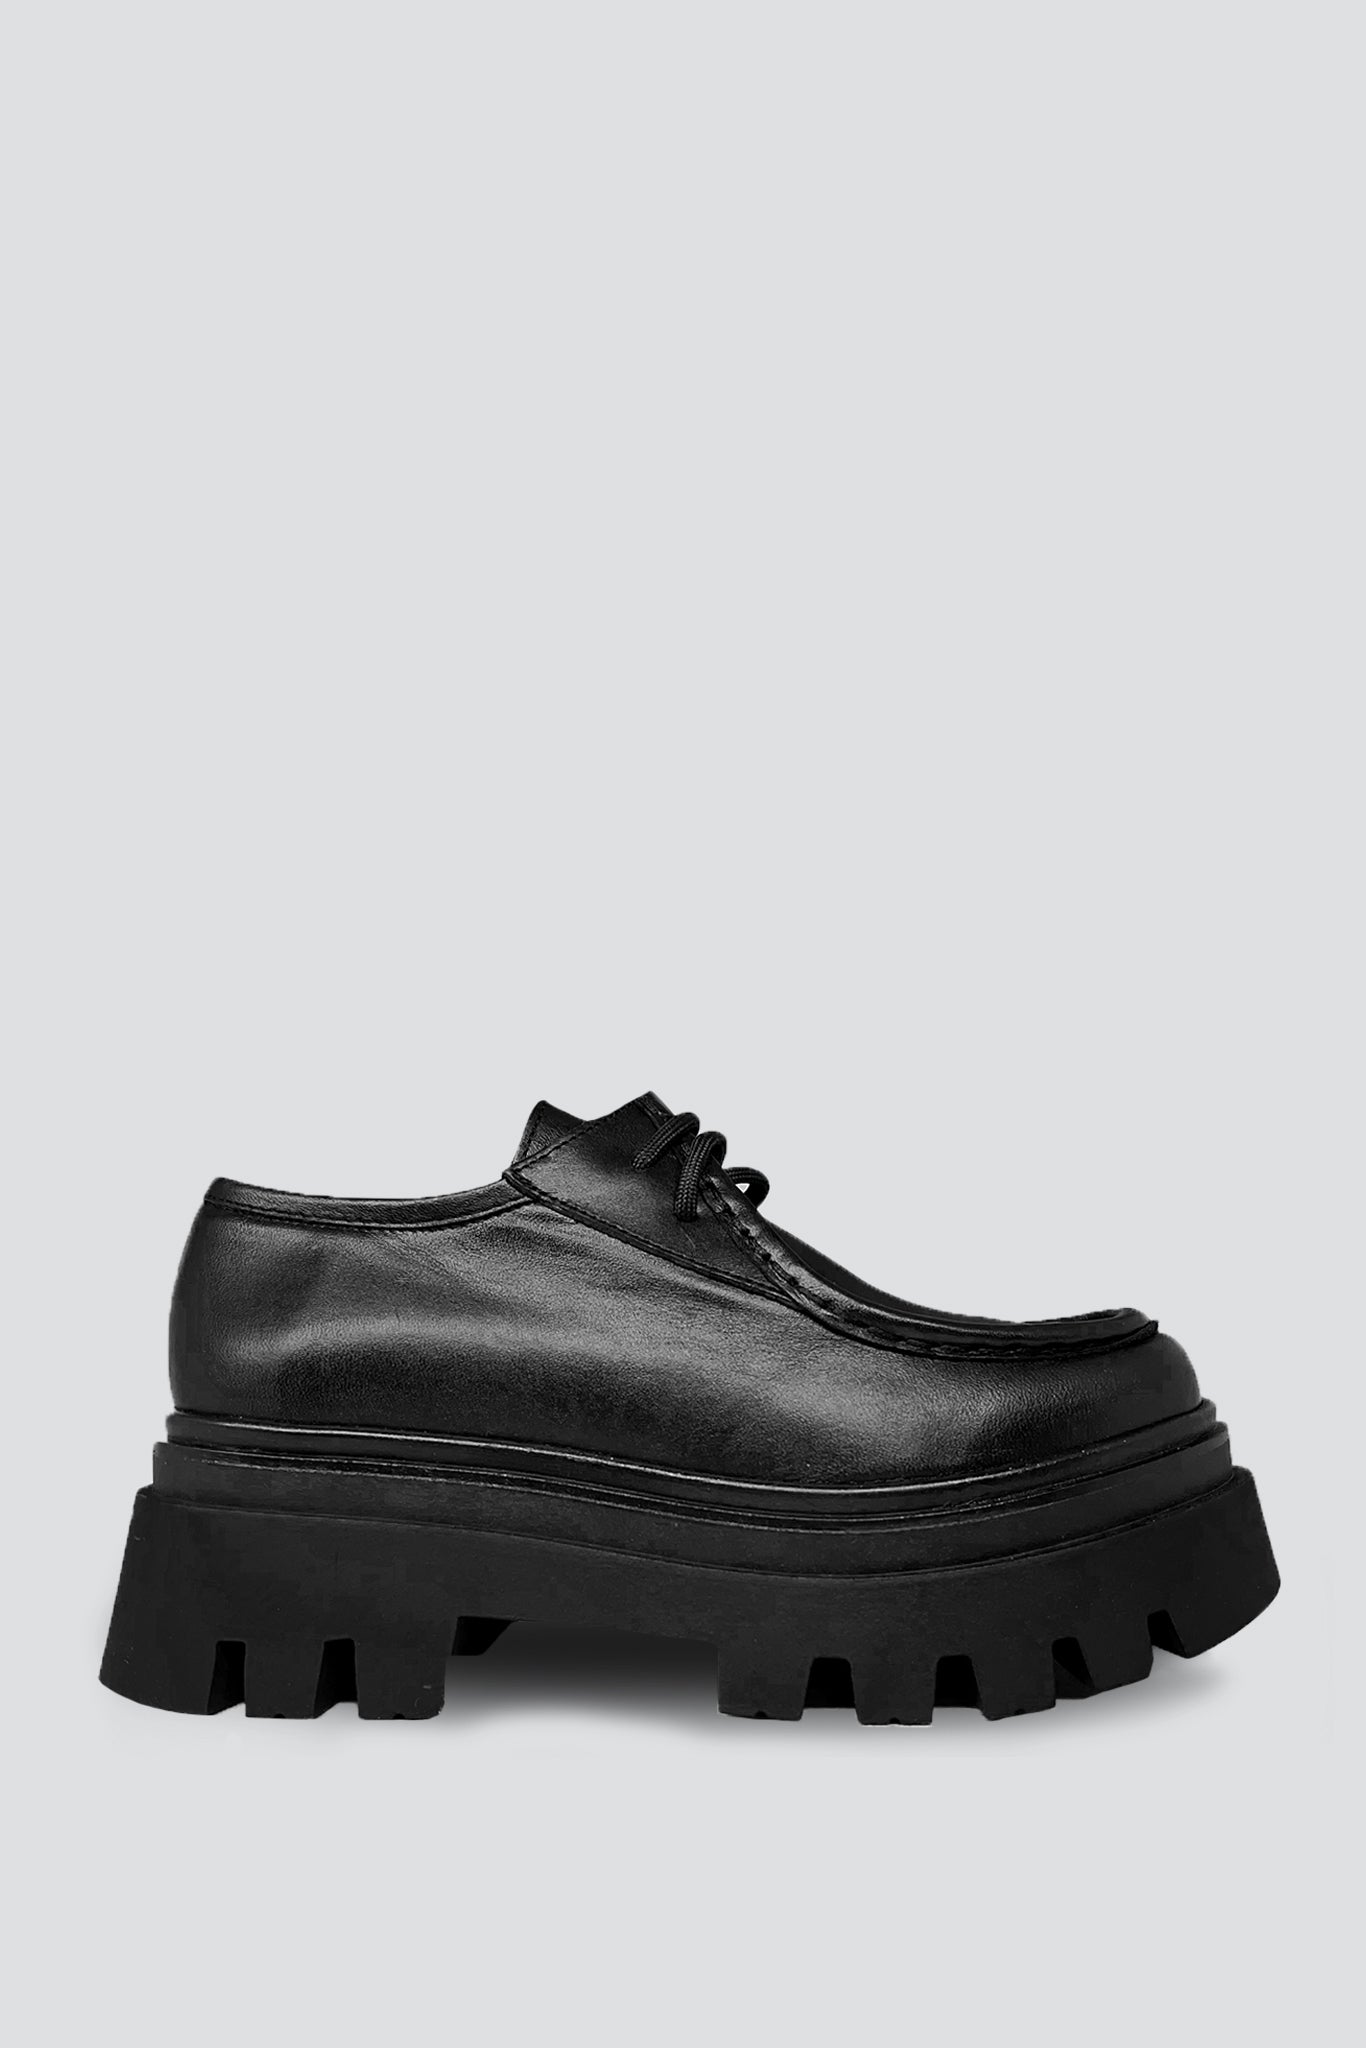 Black Leather Tycoon Shoe